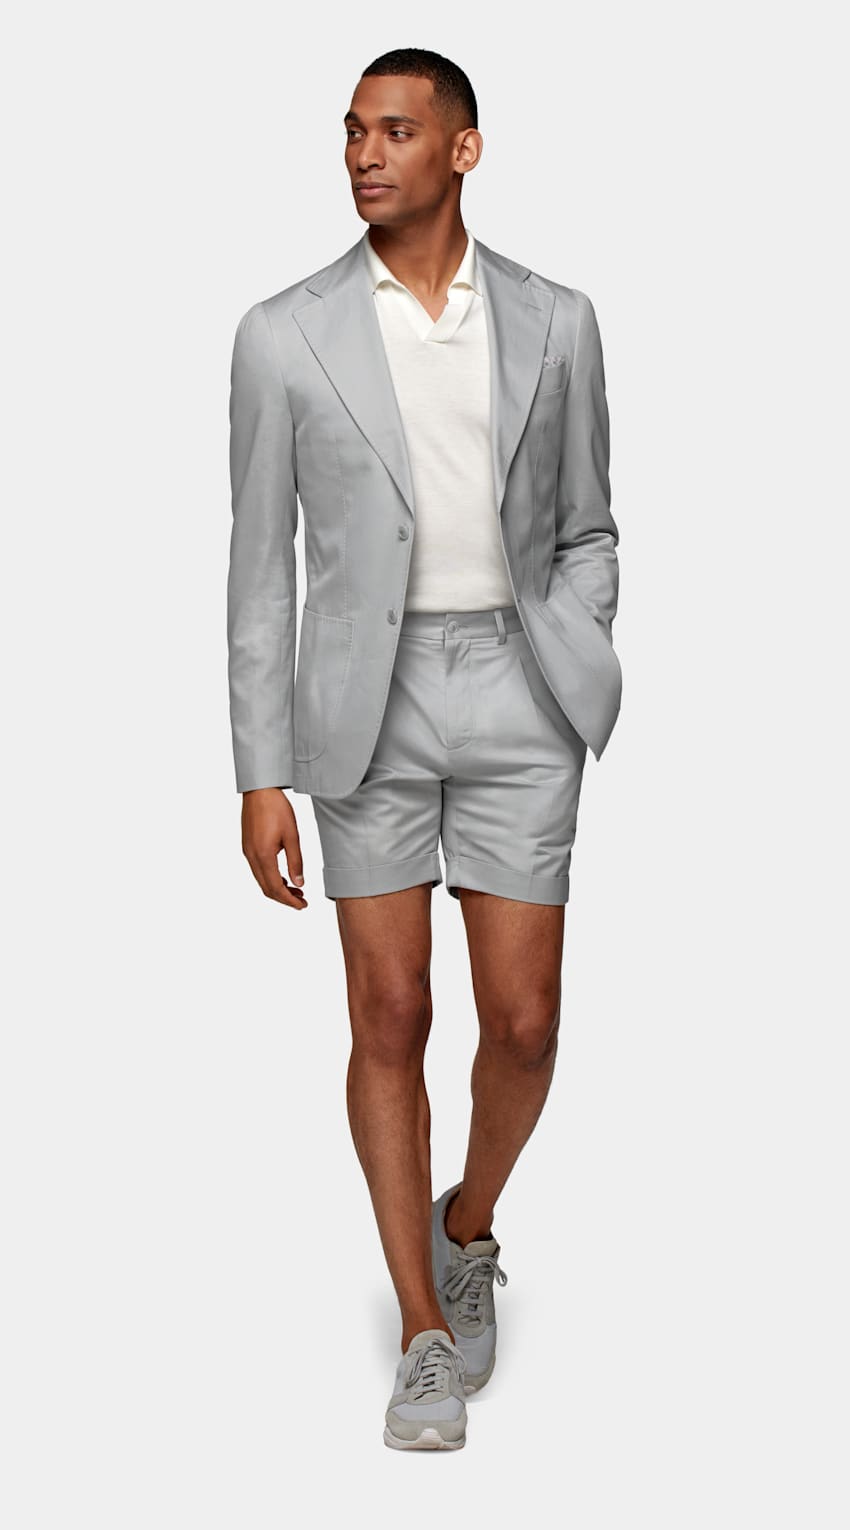 SUITSUPPLY Cotton Cashmere by Solbiati, Italy Light Grey Havana Suit